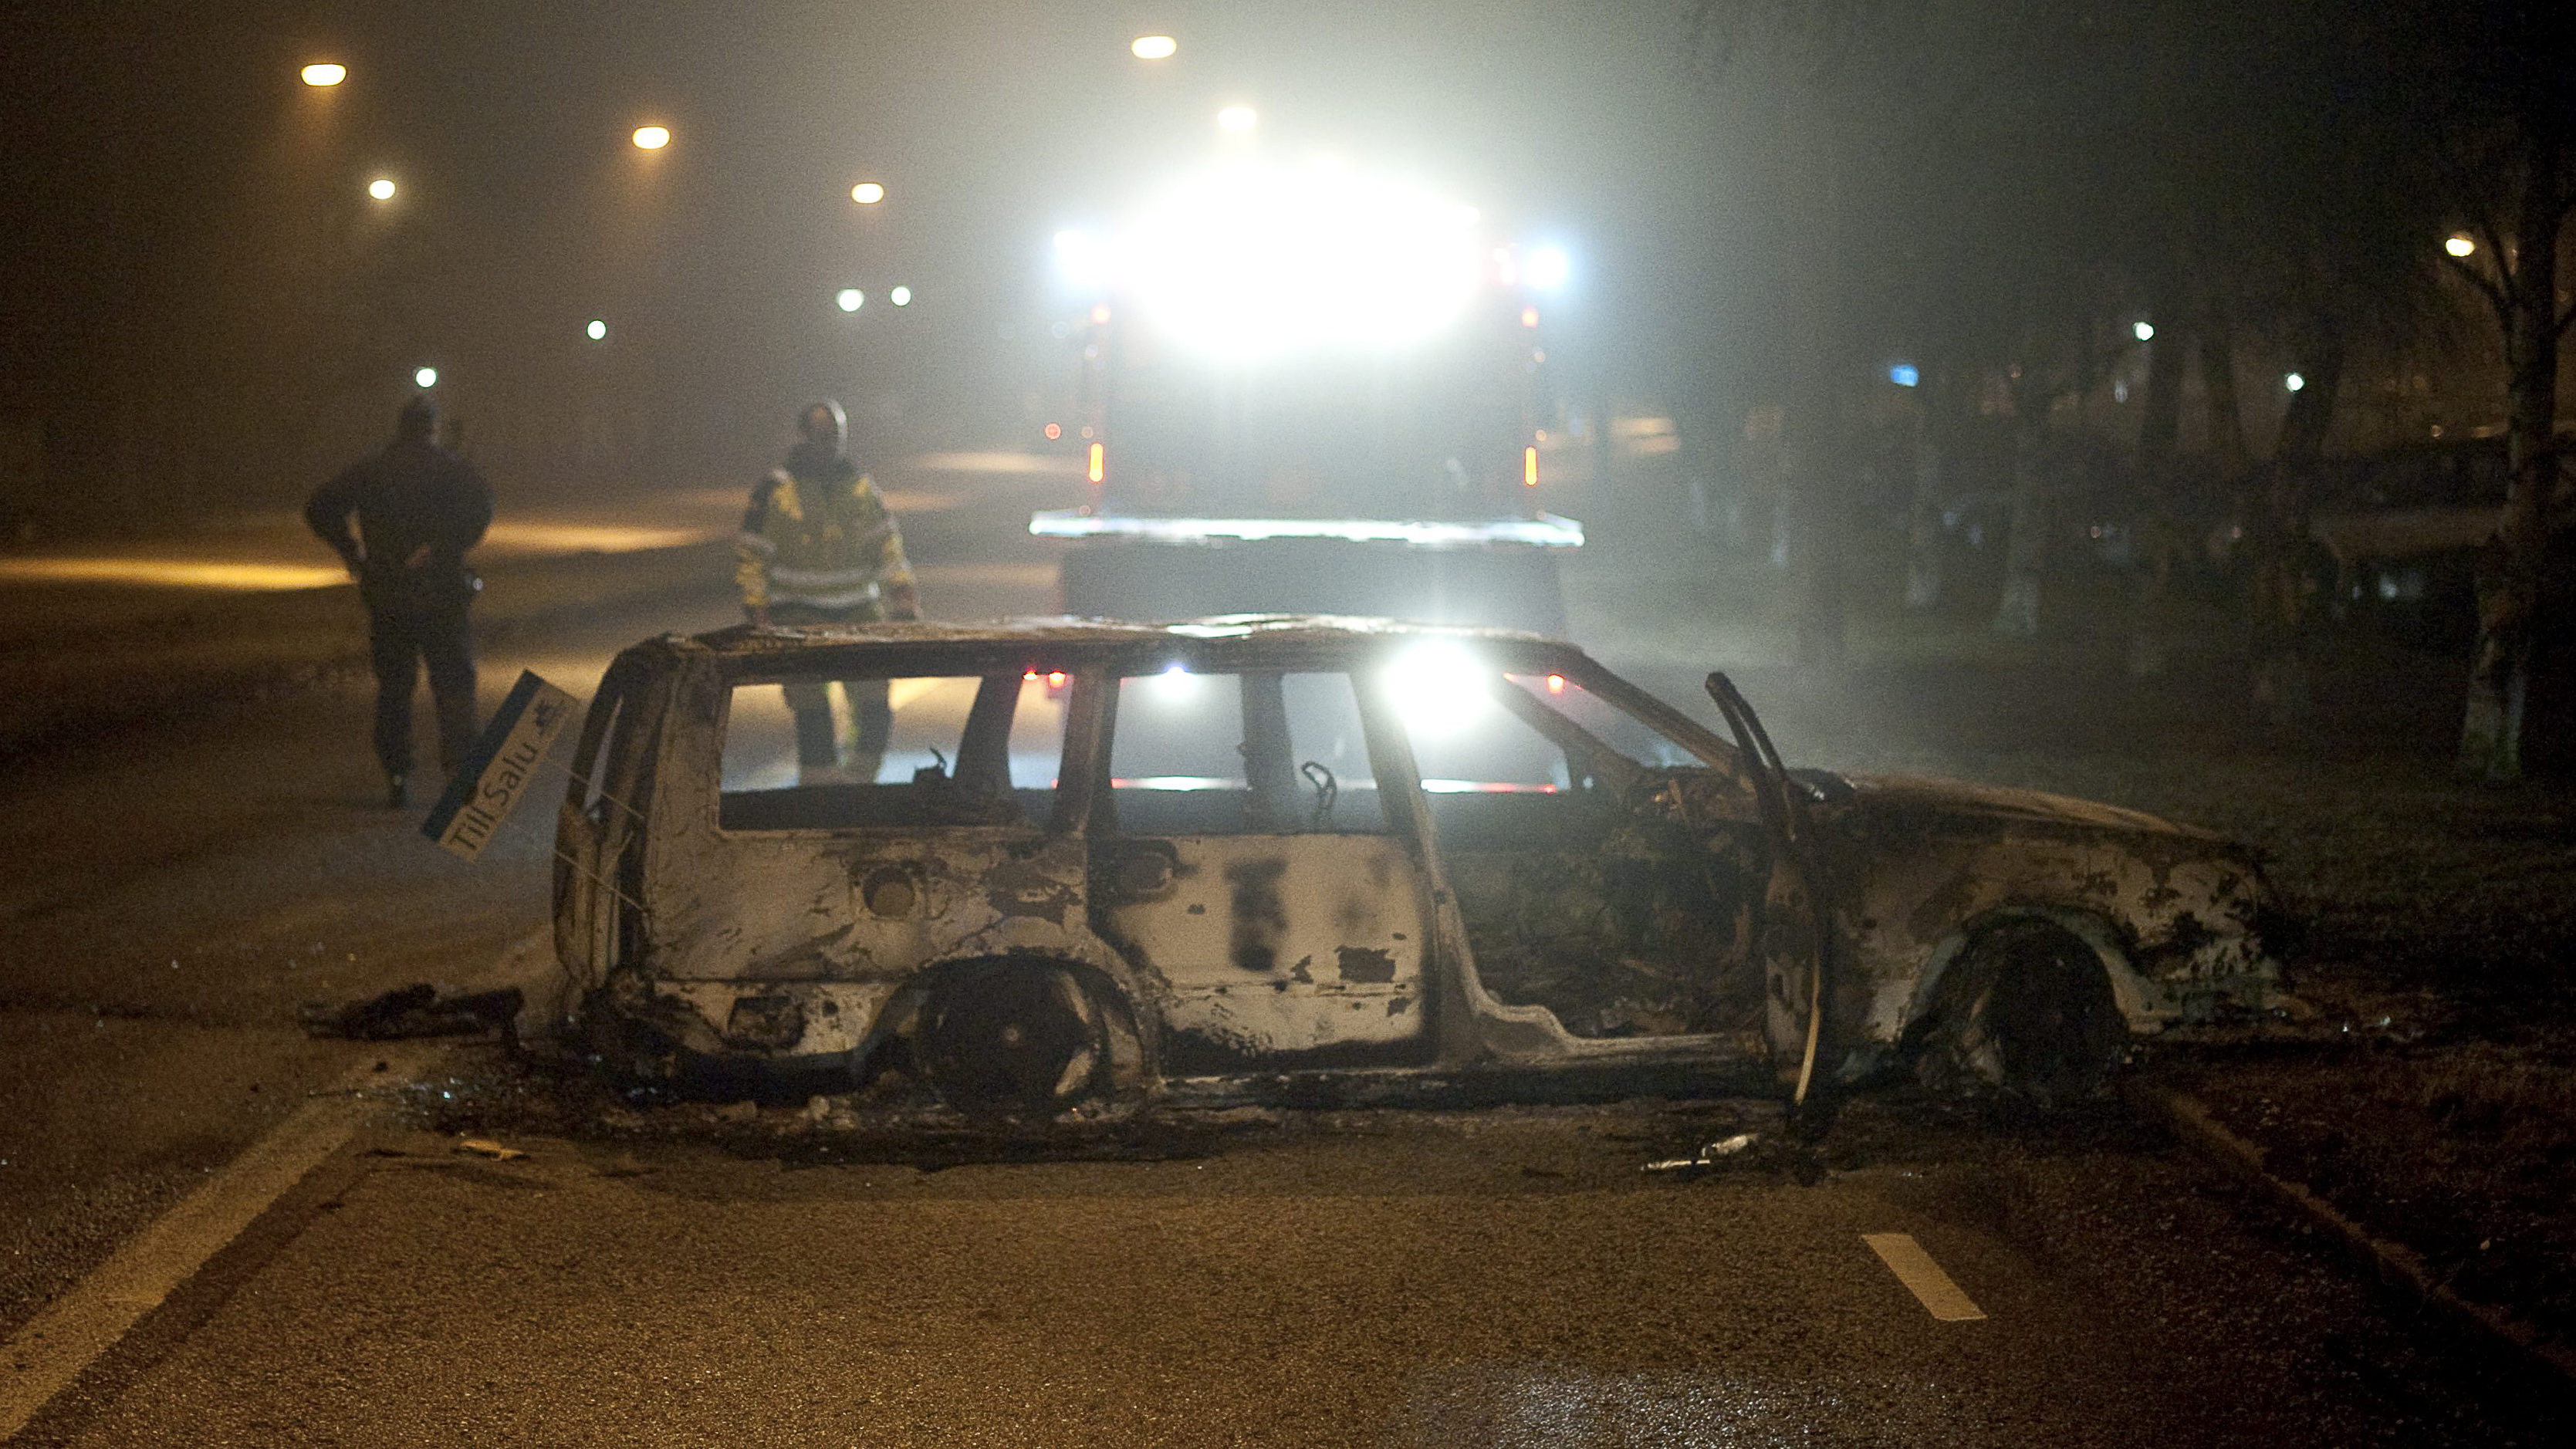 Totalt elva bilar vandaliserades eller satte i brand under natten.